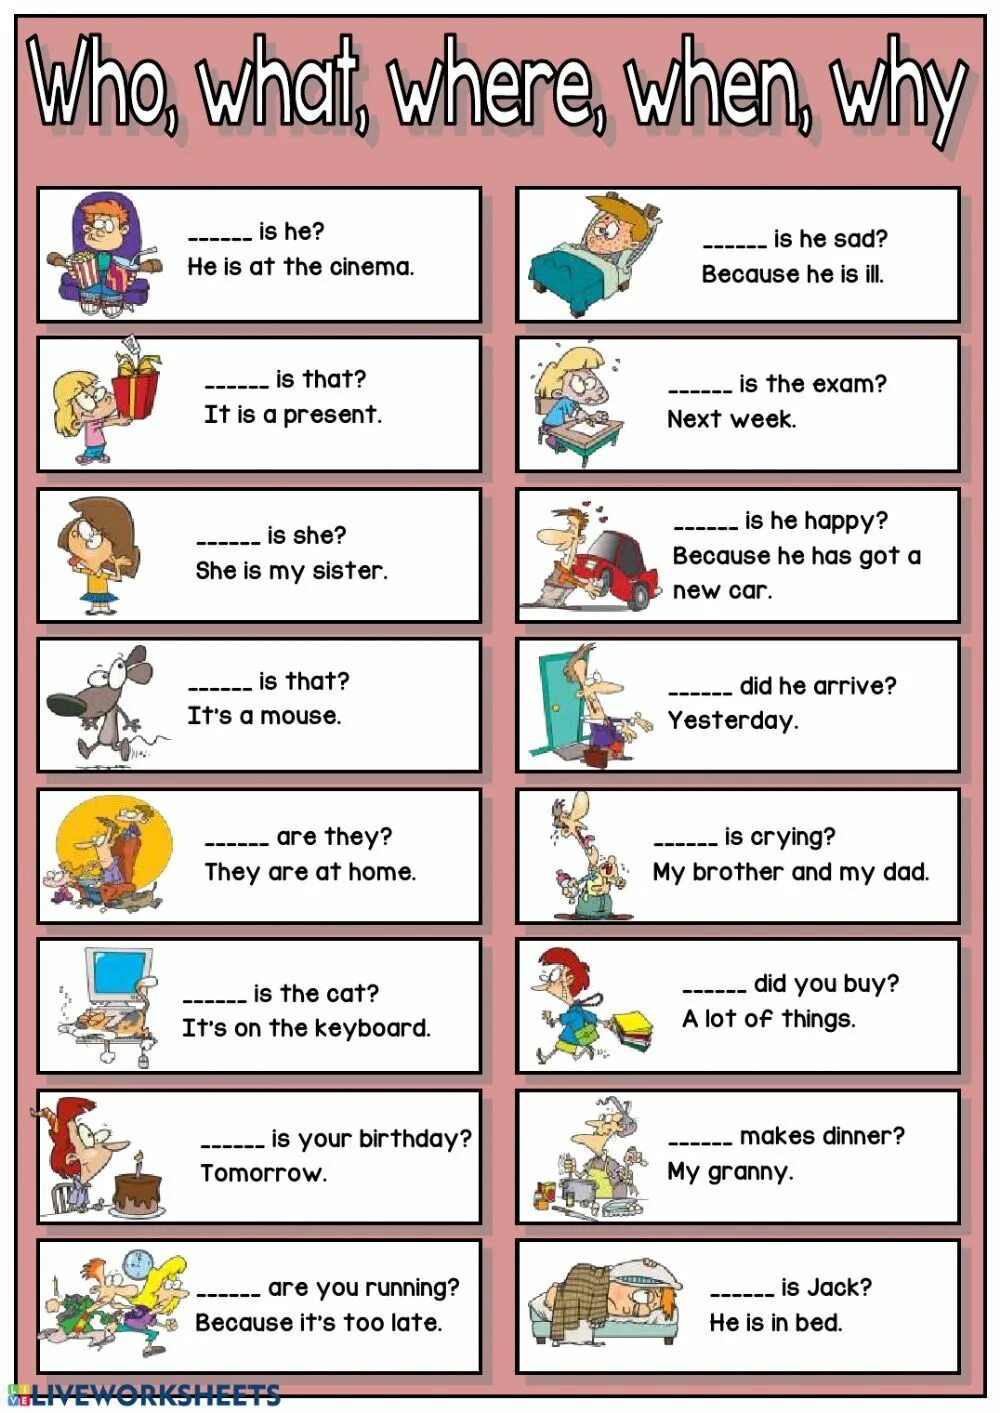 Wordwall english beginner. Вопросы Worksheets. WH вопросы Worksheets. Вопросы WH questions. Вопросы Worksheets for Kids.